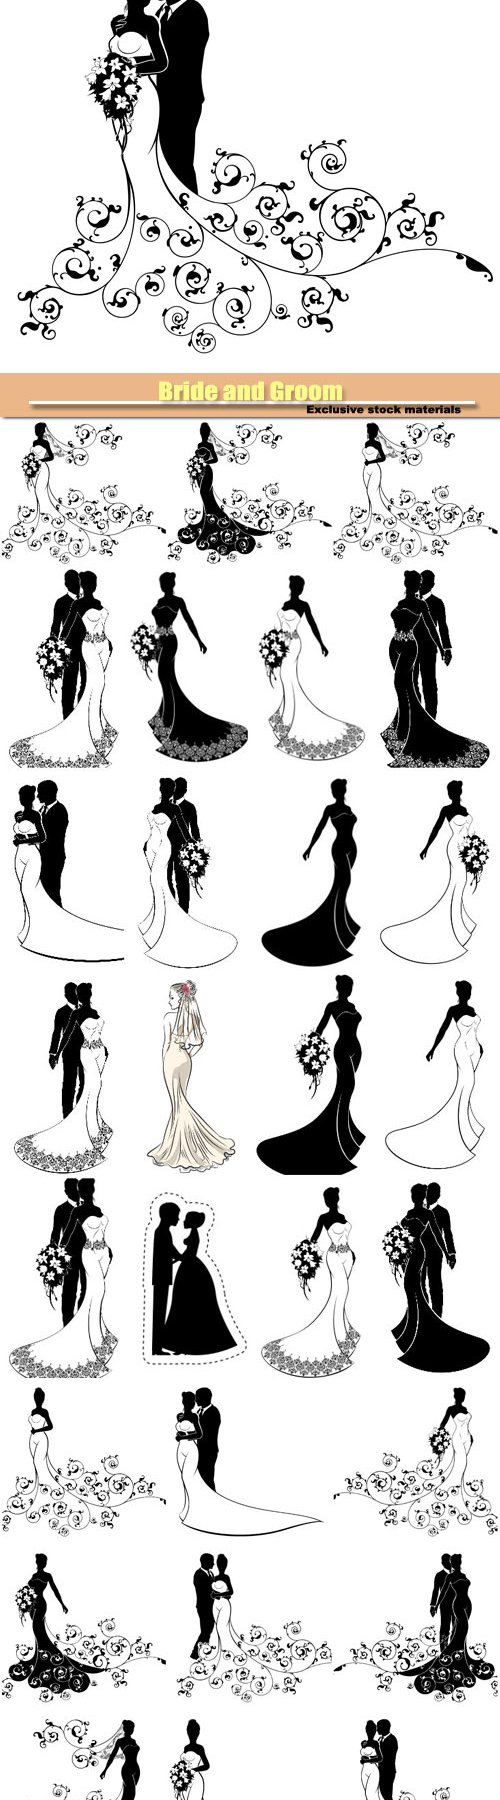 Bride and Groom, wedding silhouette vector set